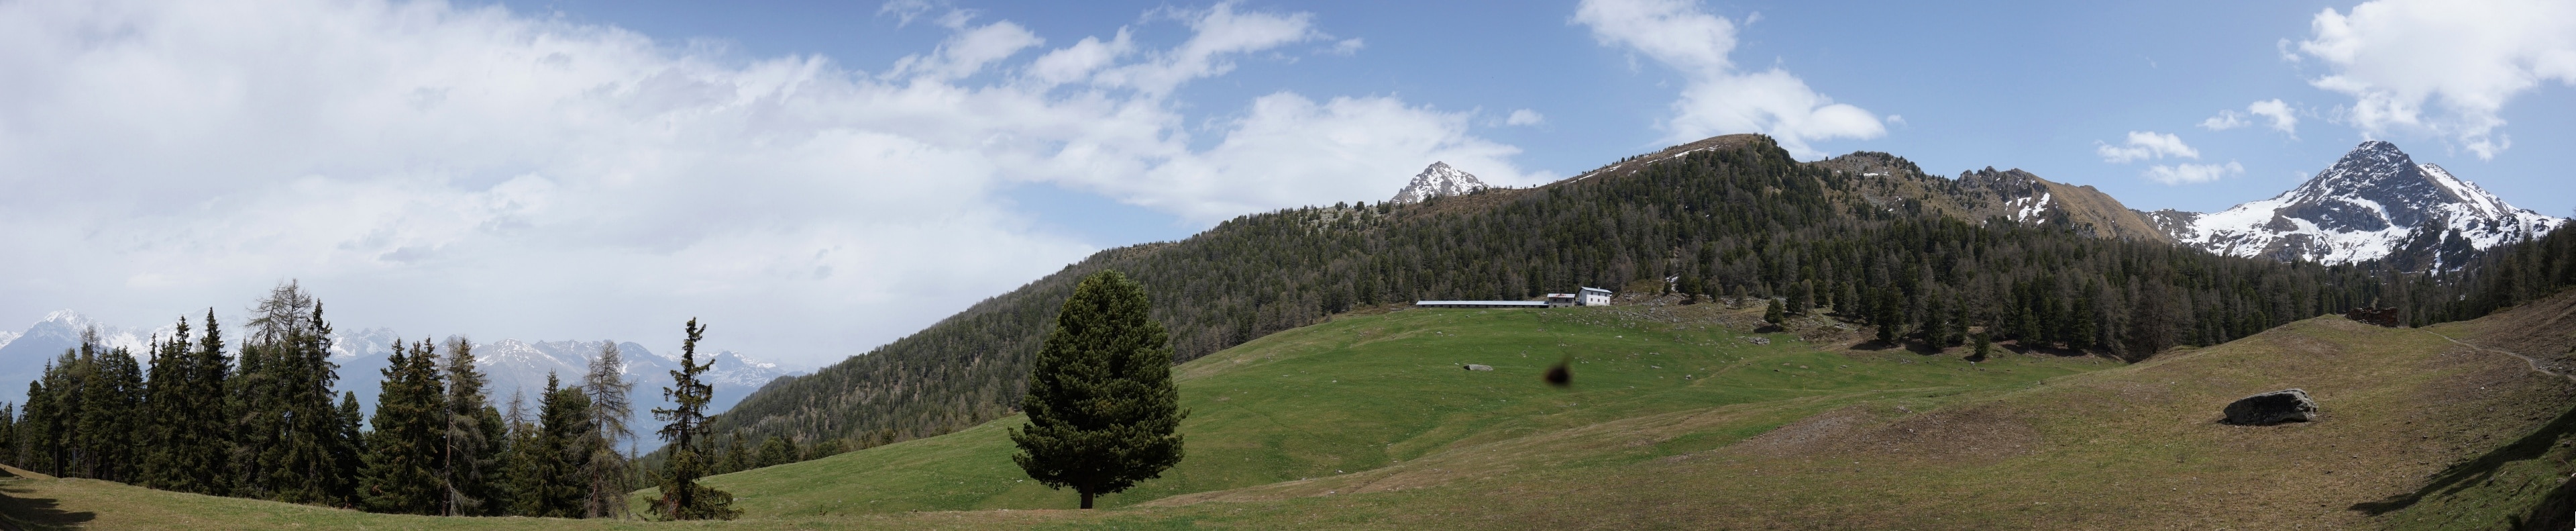 Meadow on Italian Alps.